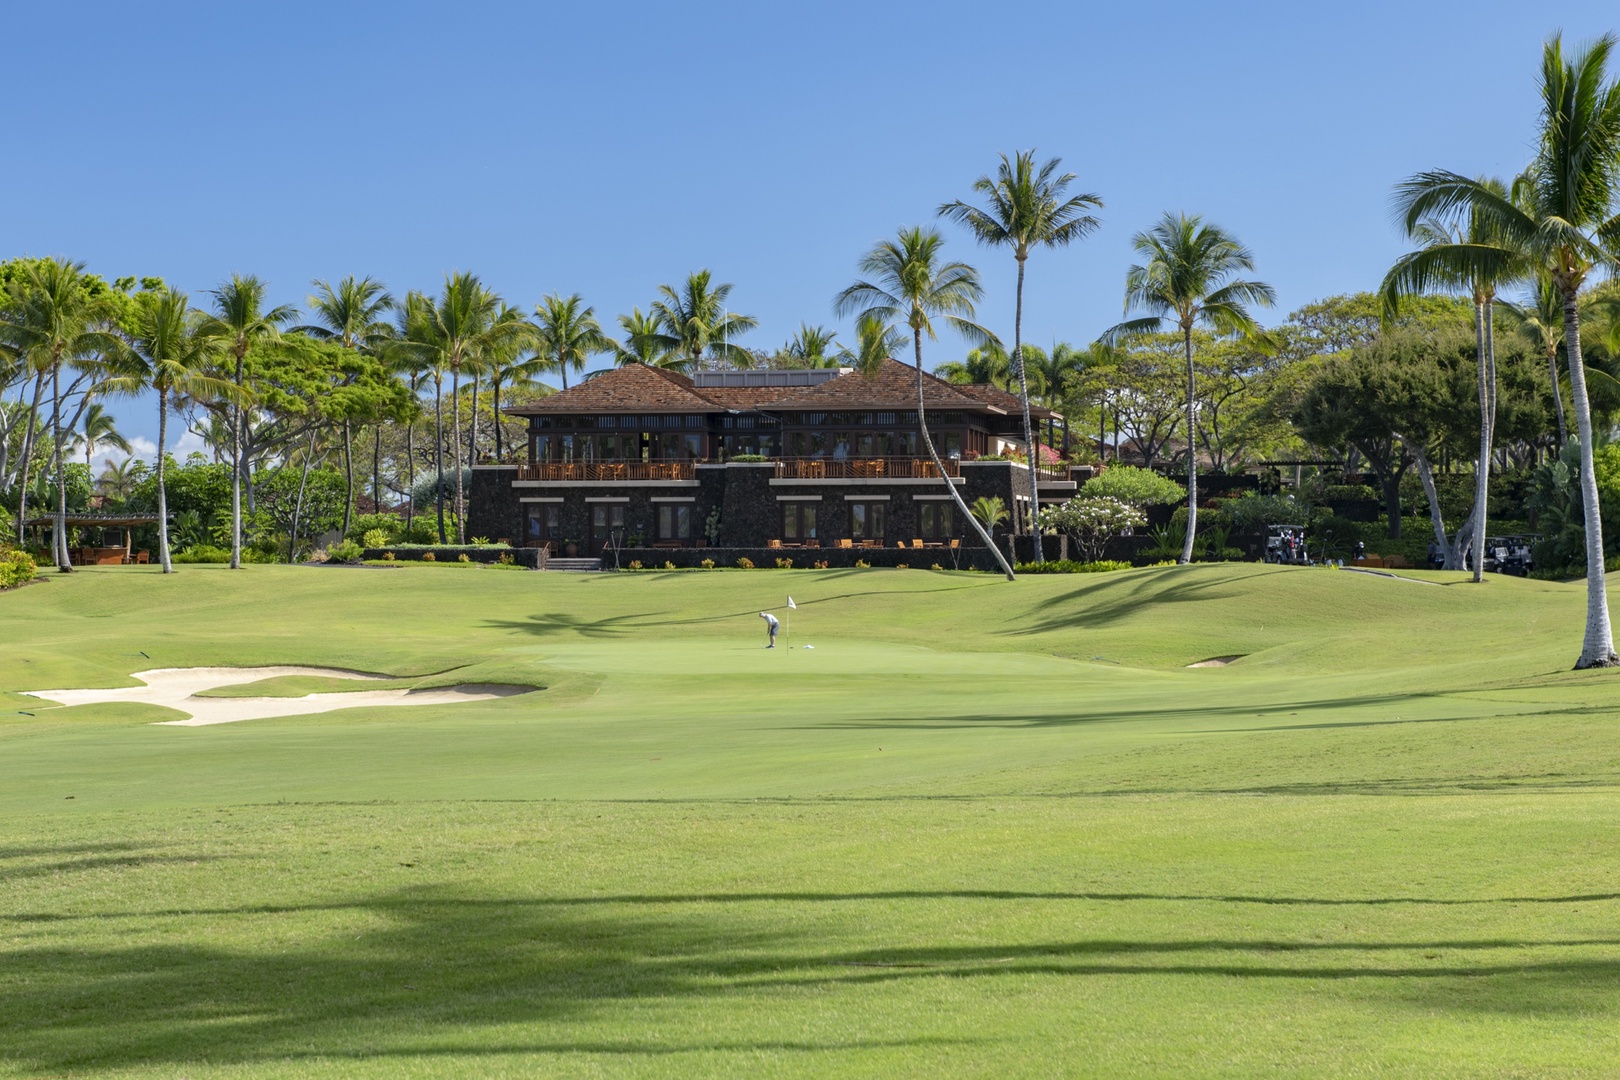 Kailua Kona Vacation Rentals, 3BD Golf Villa (3101) at Four Seasons Resort at Hualalai - View looking from from in front of the villa towards the green of the 18th, the resort pro shop and one of the resort restaurants.